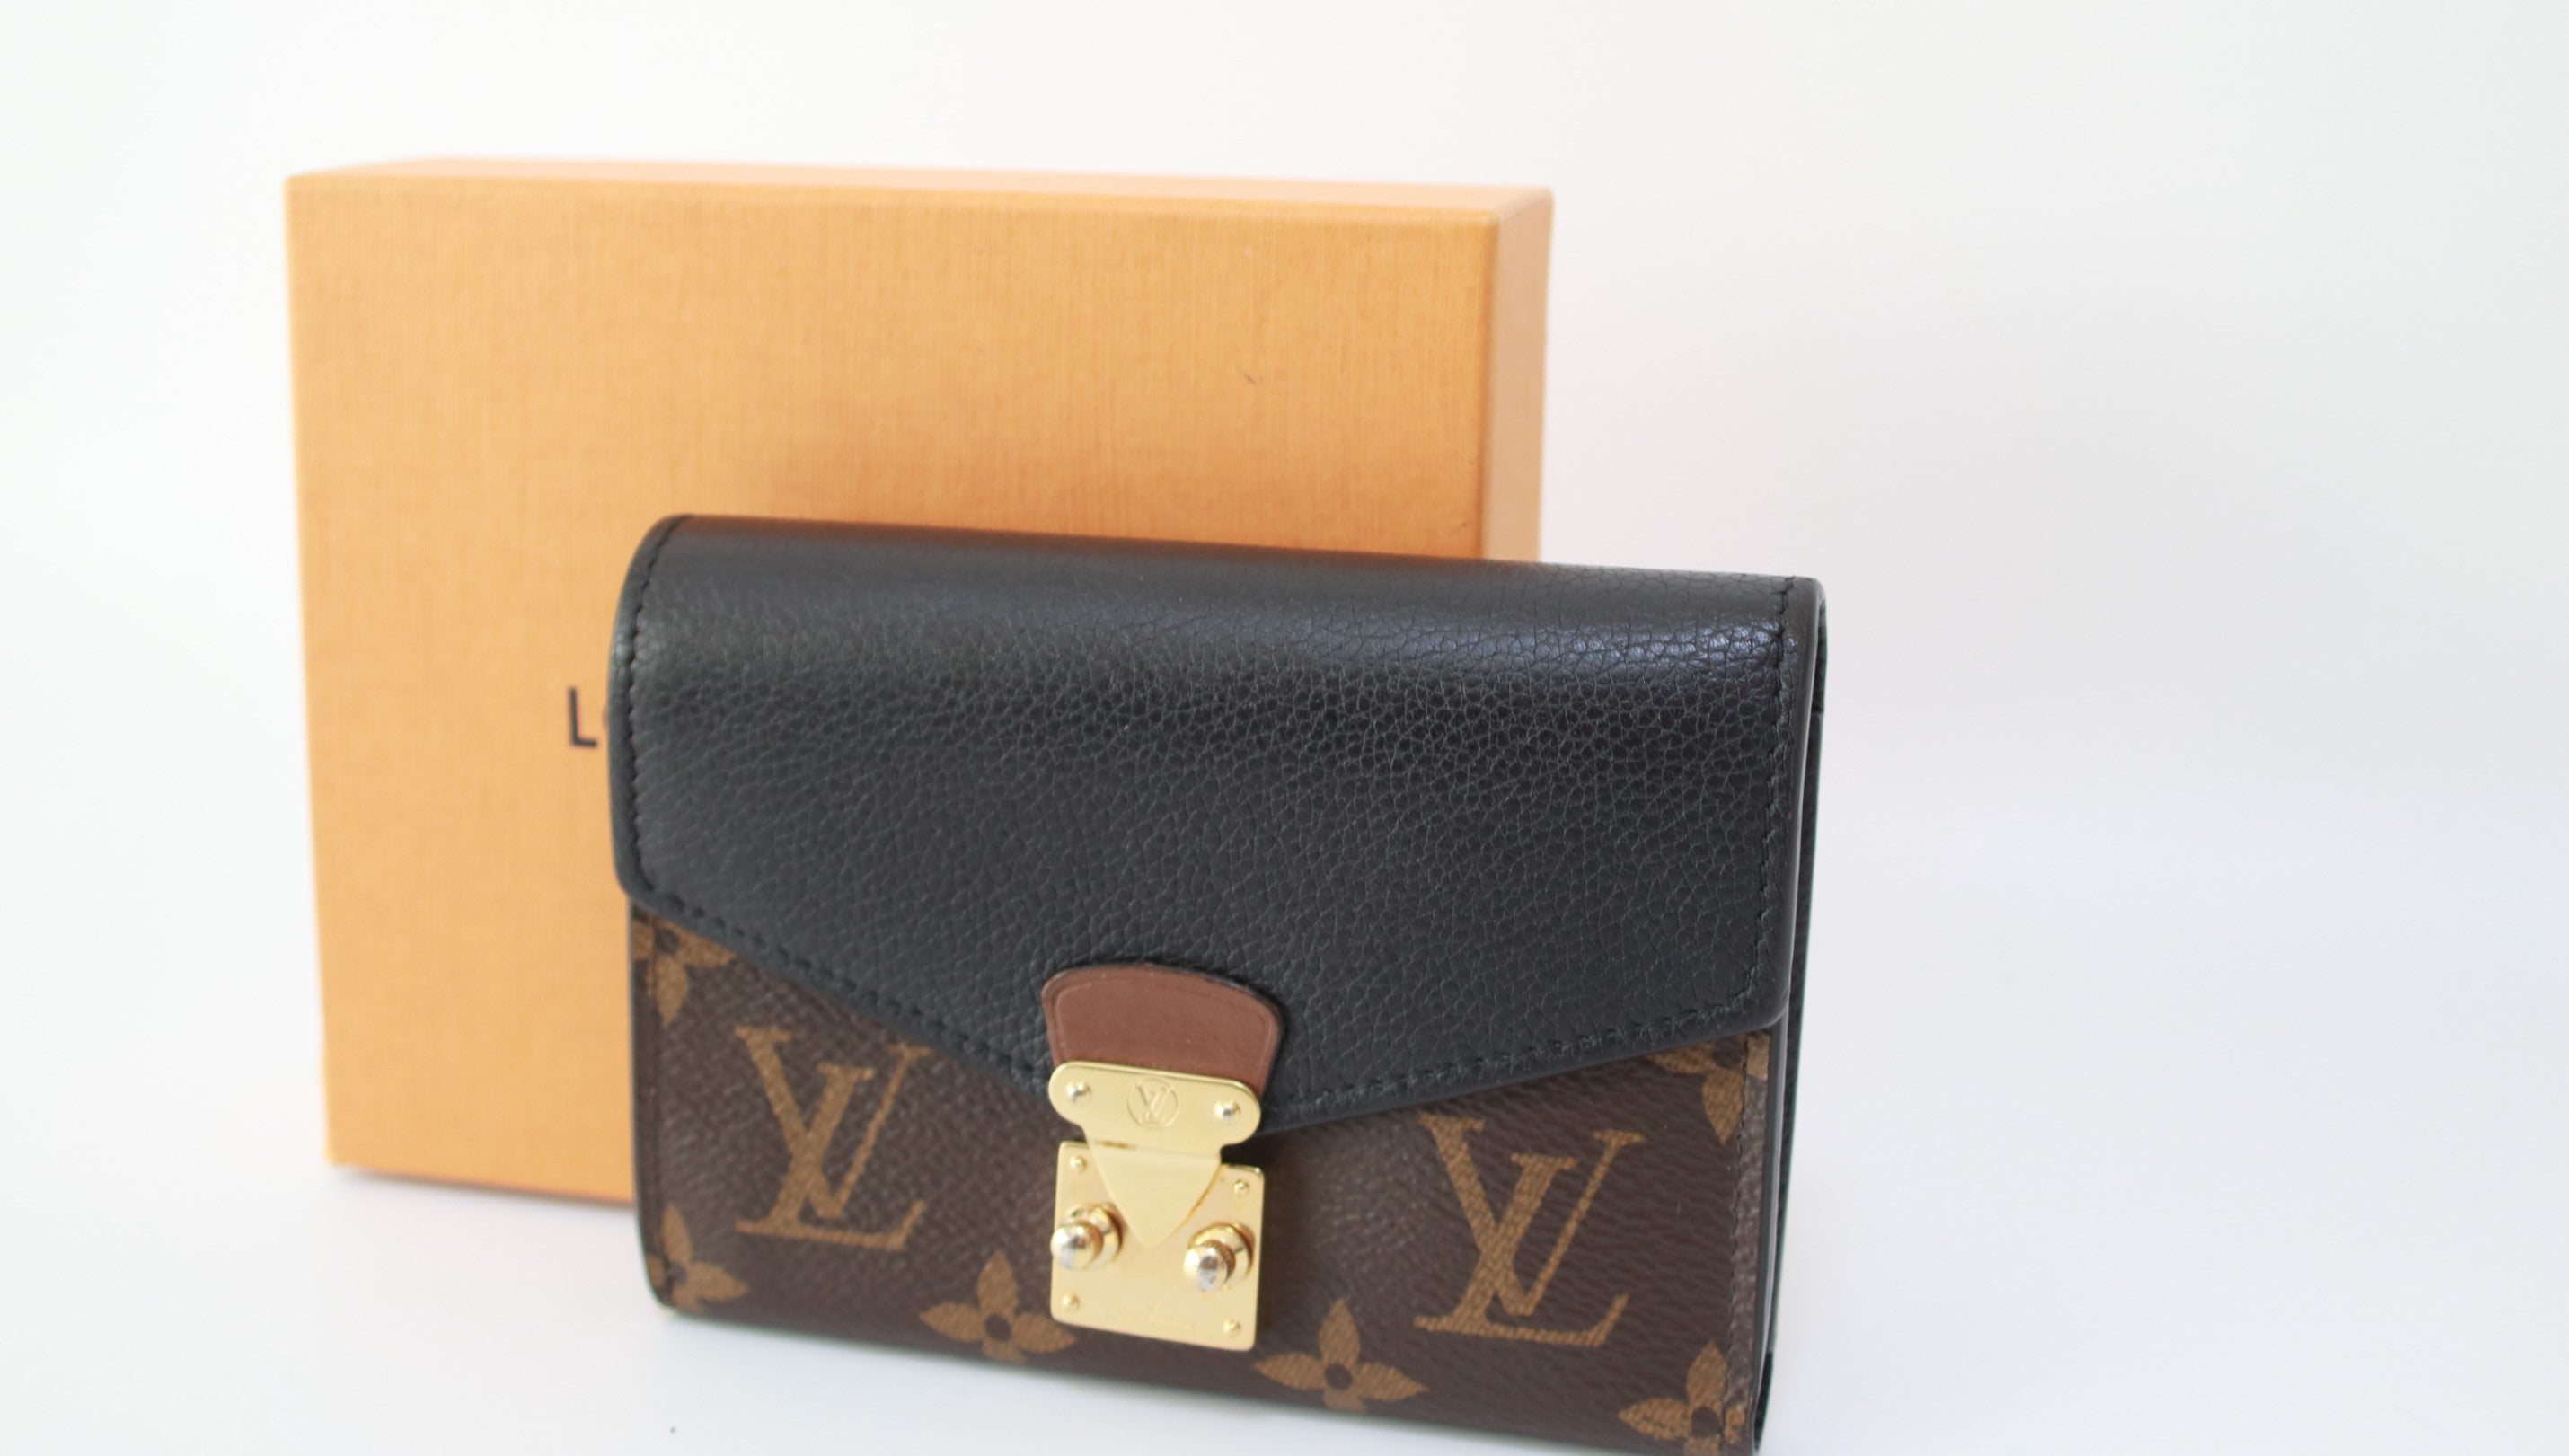 Louis Vuitton Pallas Compact Wallet Black Used (6770)